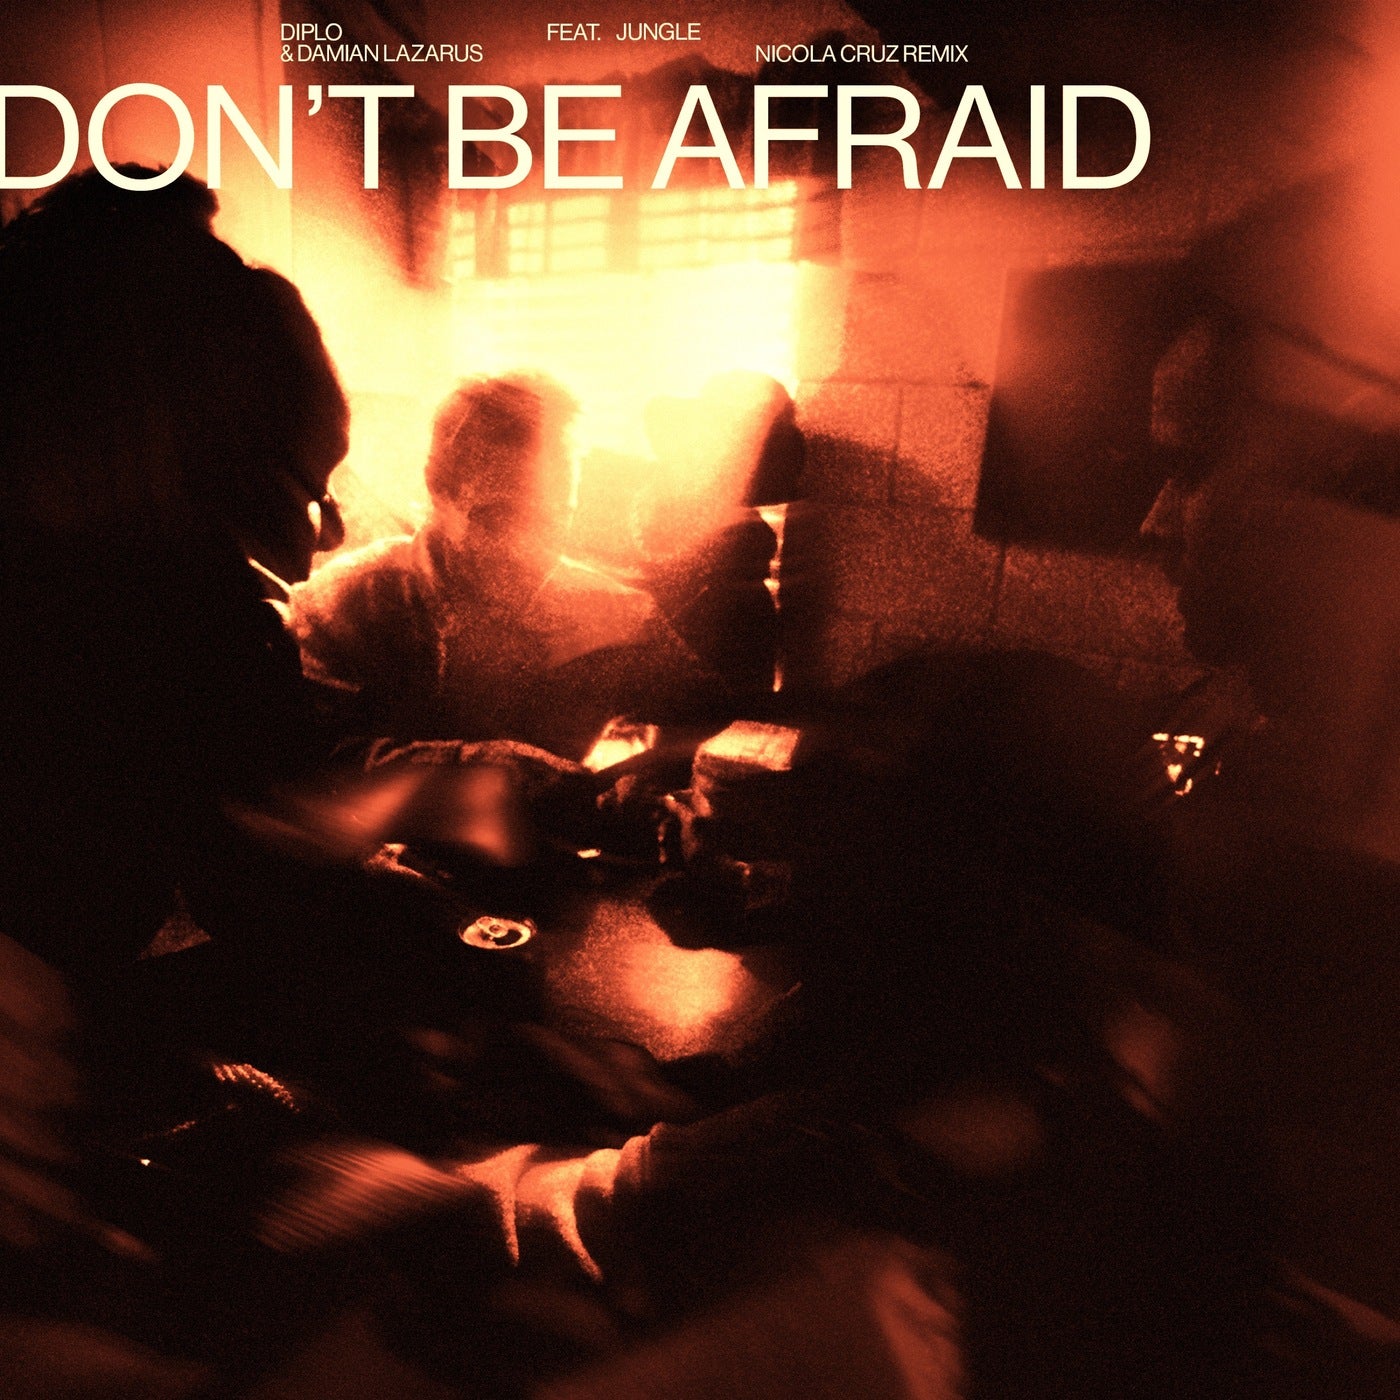 Download Don't Be Afraid feat. Jungle [Nicola Cruz Remix] on Electrobuzz